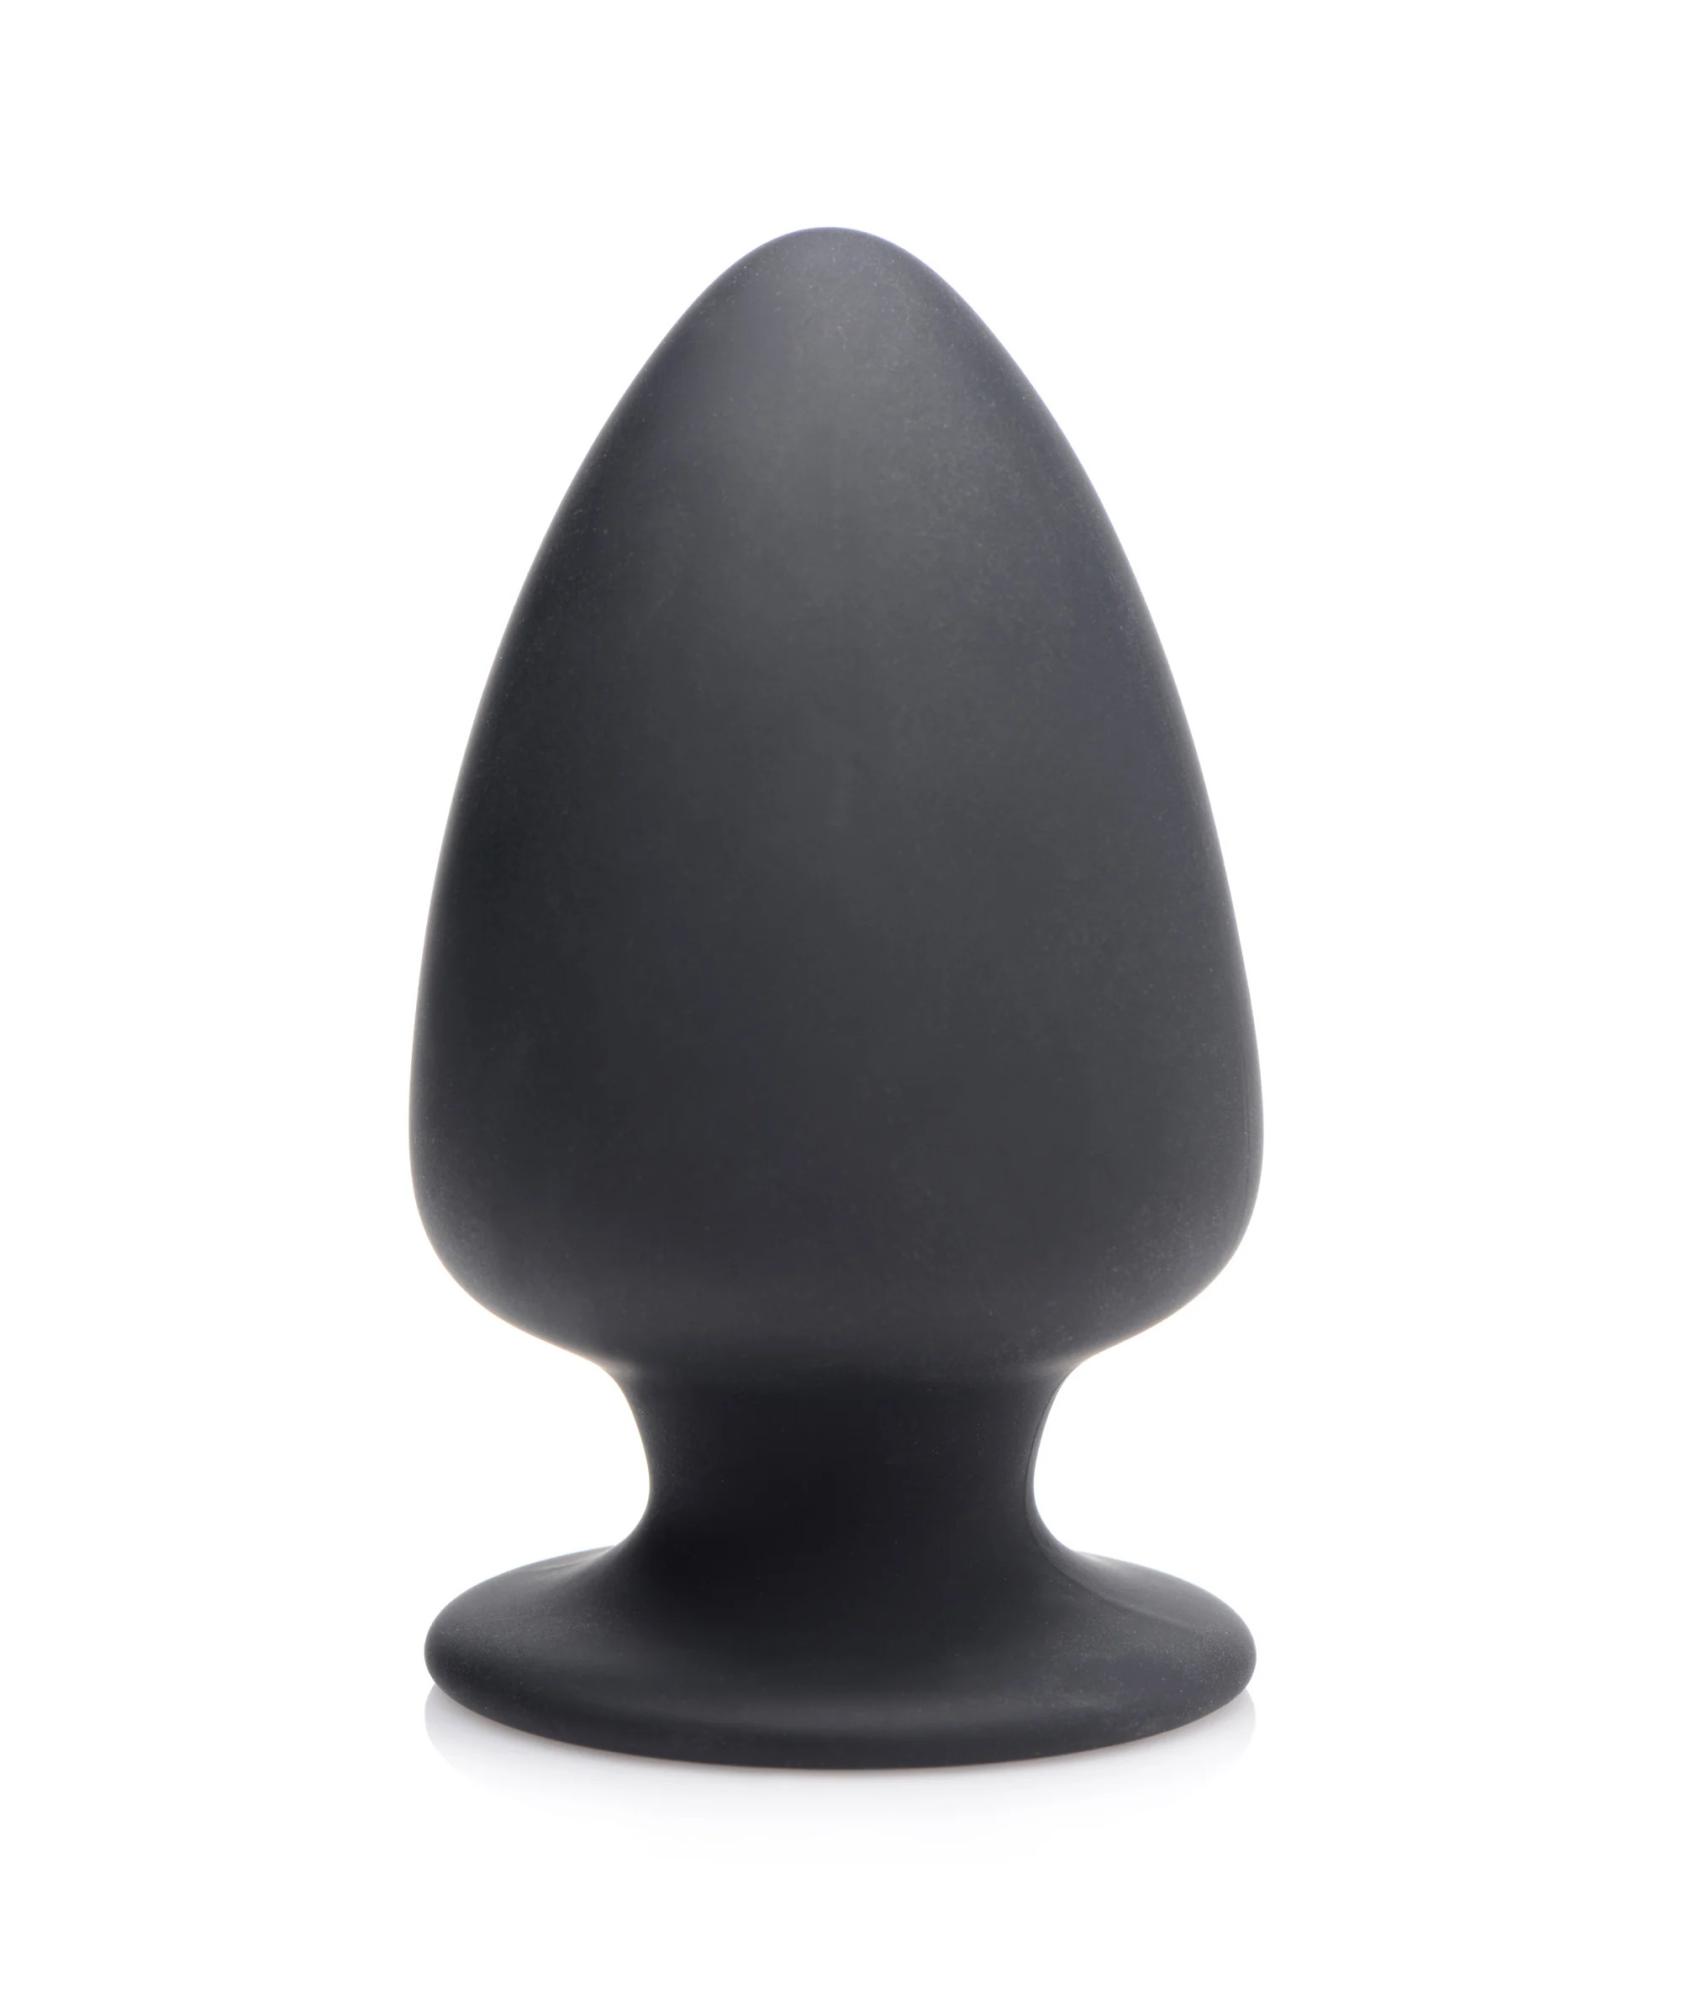 Squeeze-It Silicone Anal Plug Medium - мягкая гибкая анальная пробка, M 11х6.4 см (чёрный) - фото 1